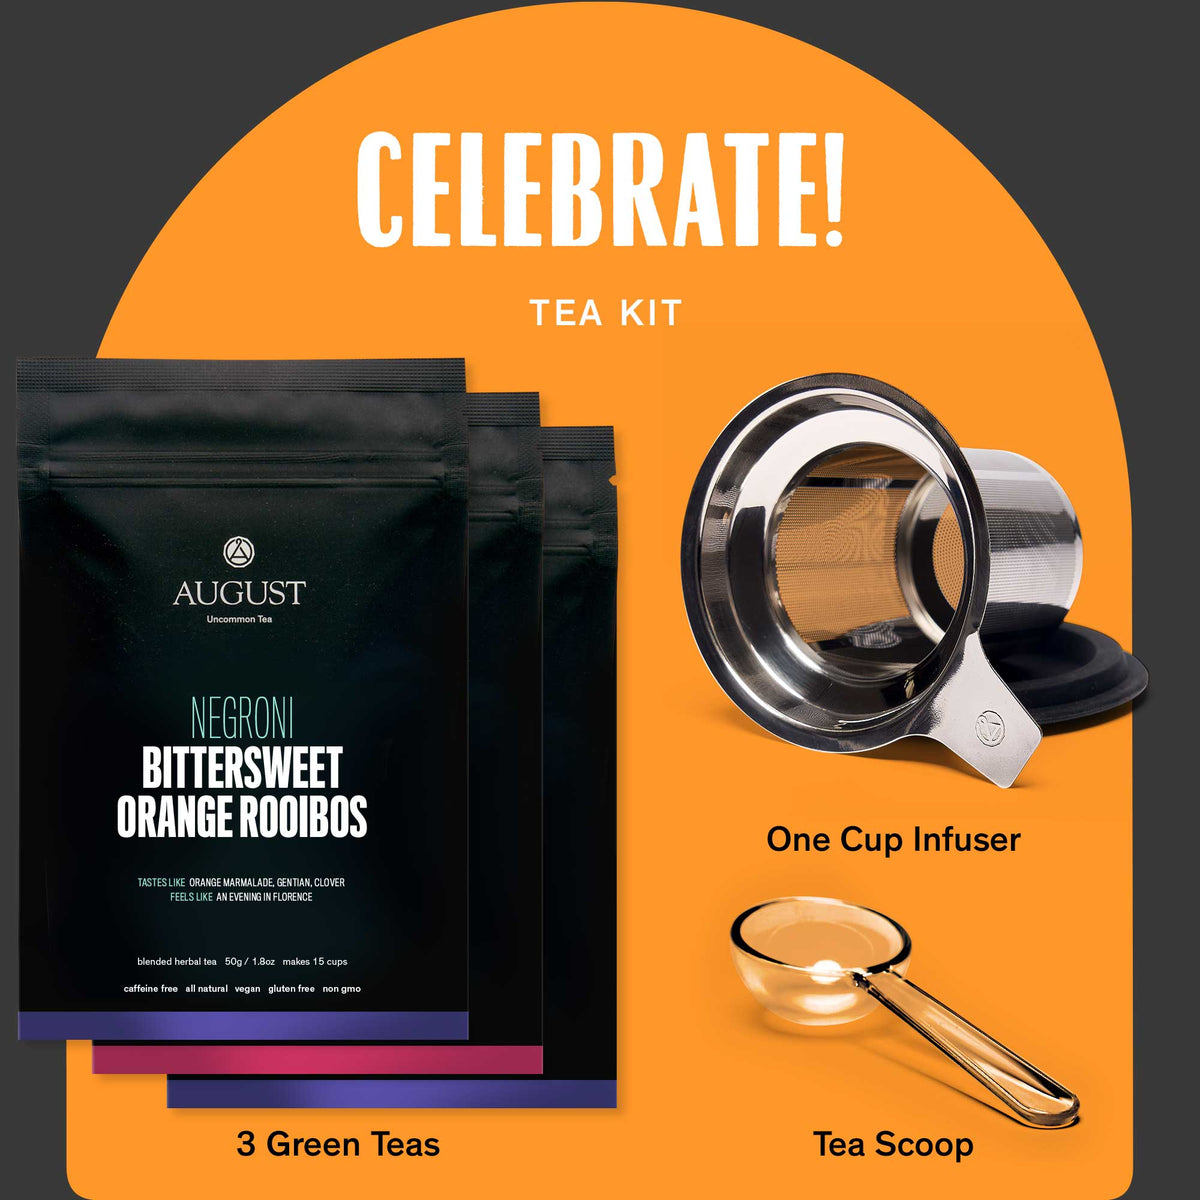 Celebrate! Tea Kit